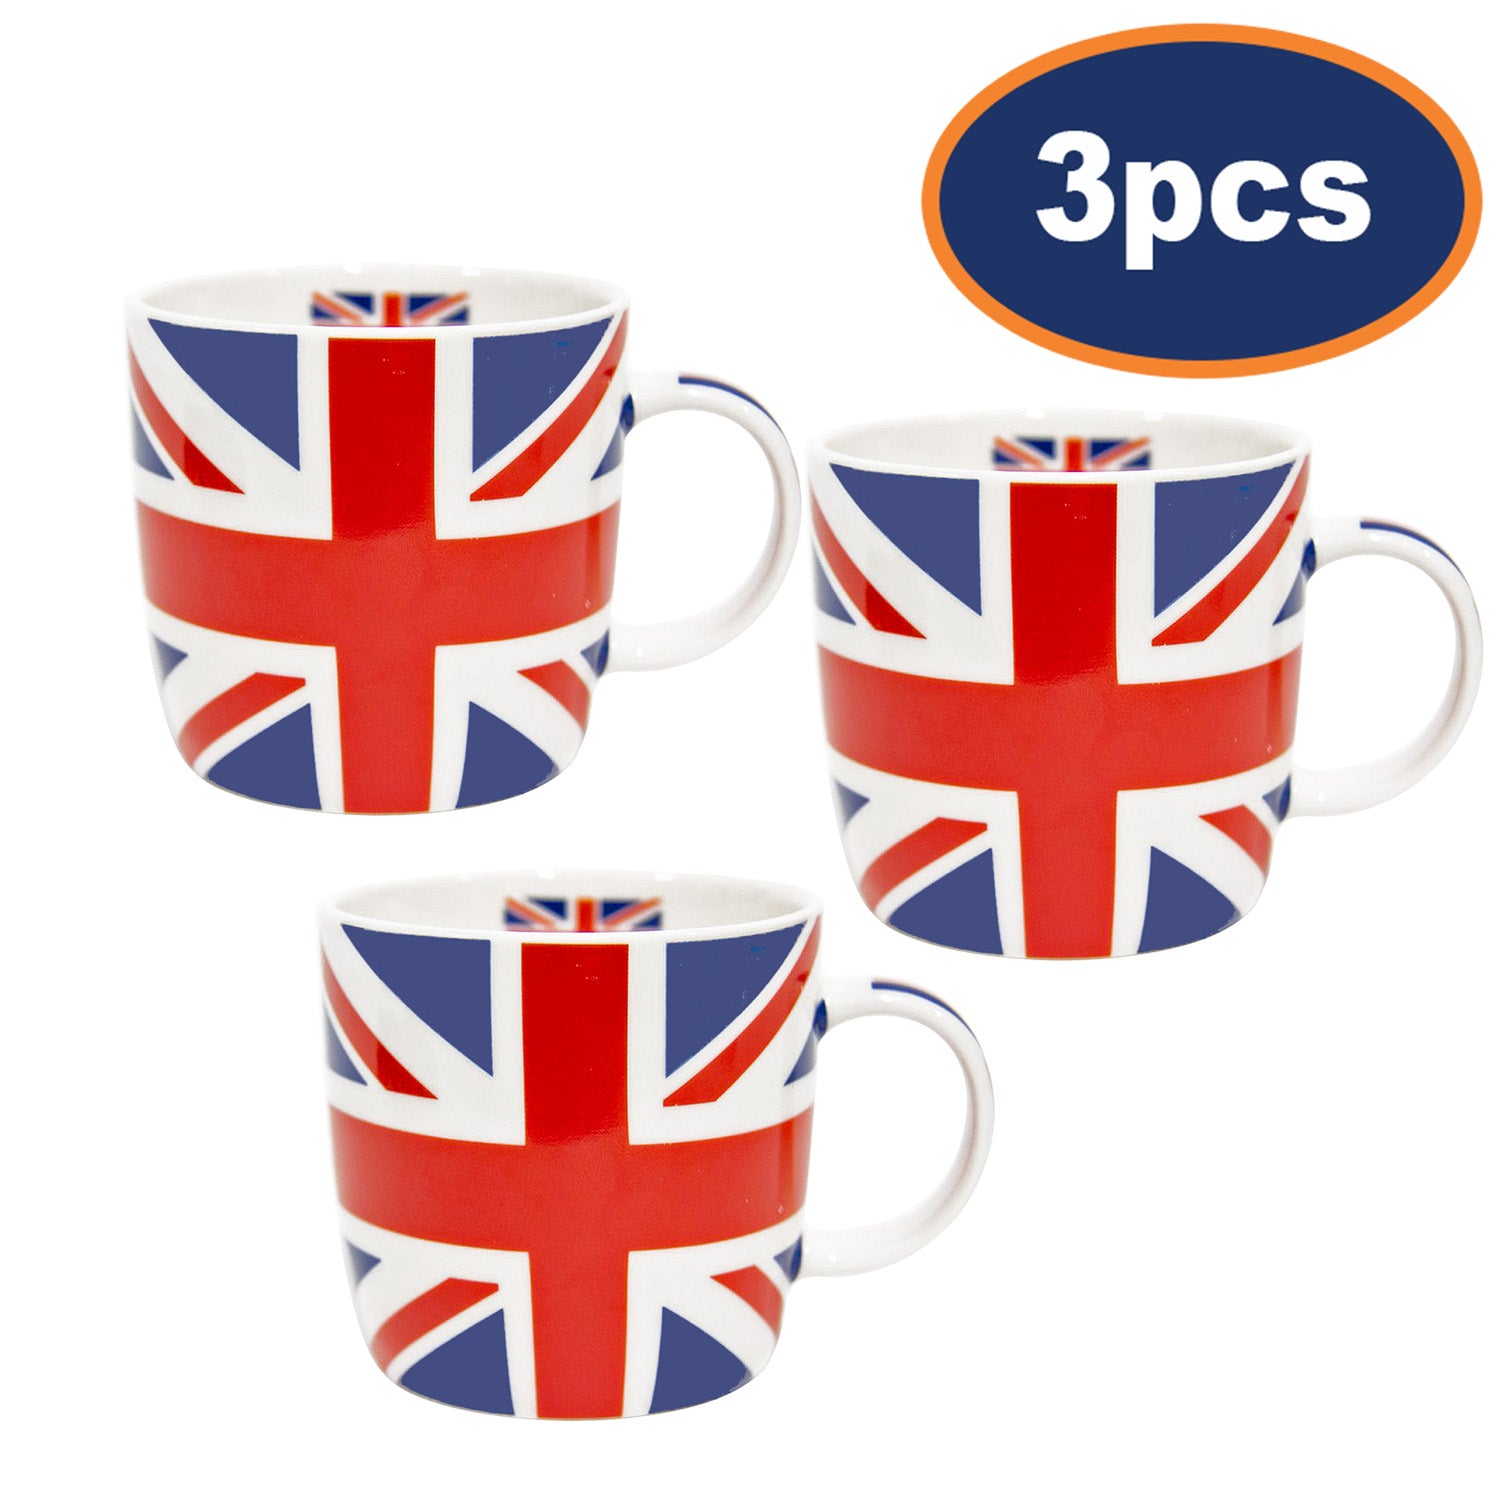 3Pcs 175ml Union Jack Ceramic Mug